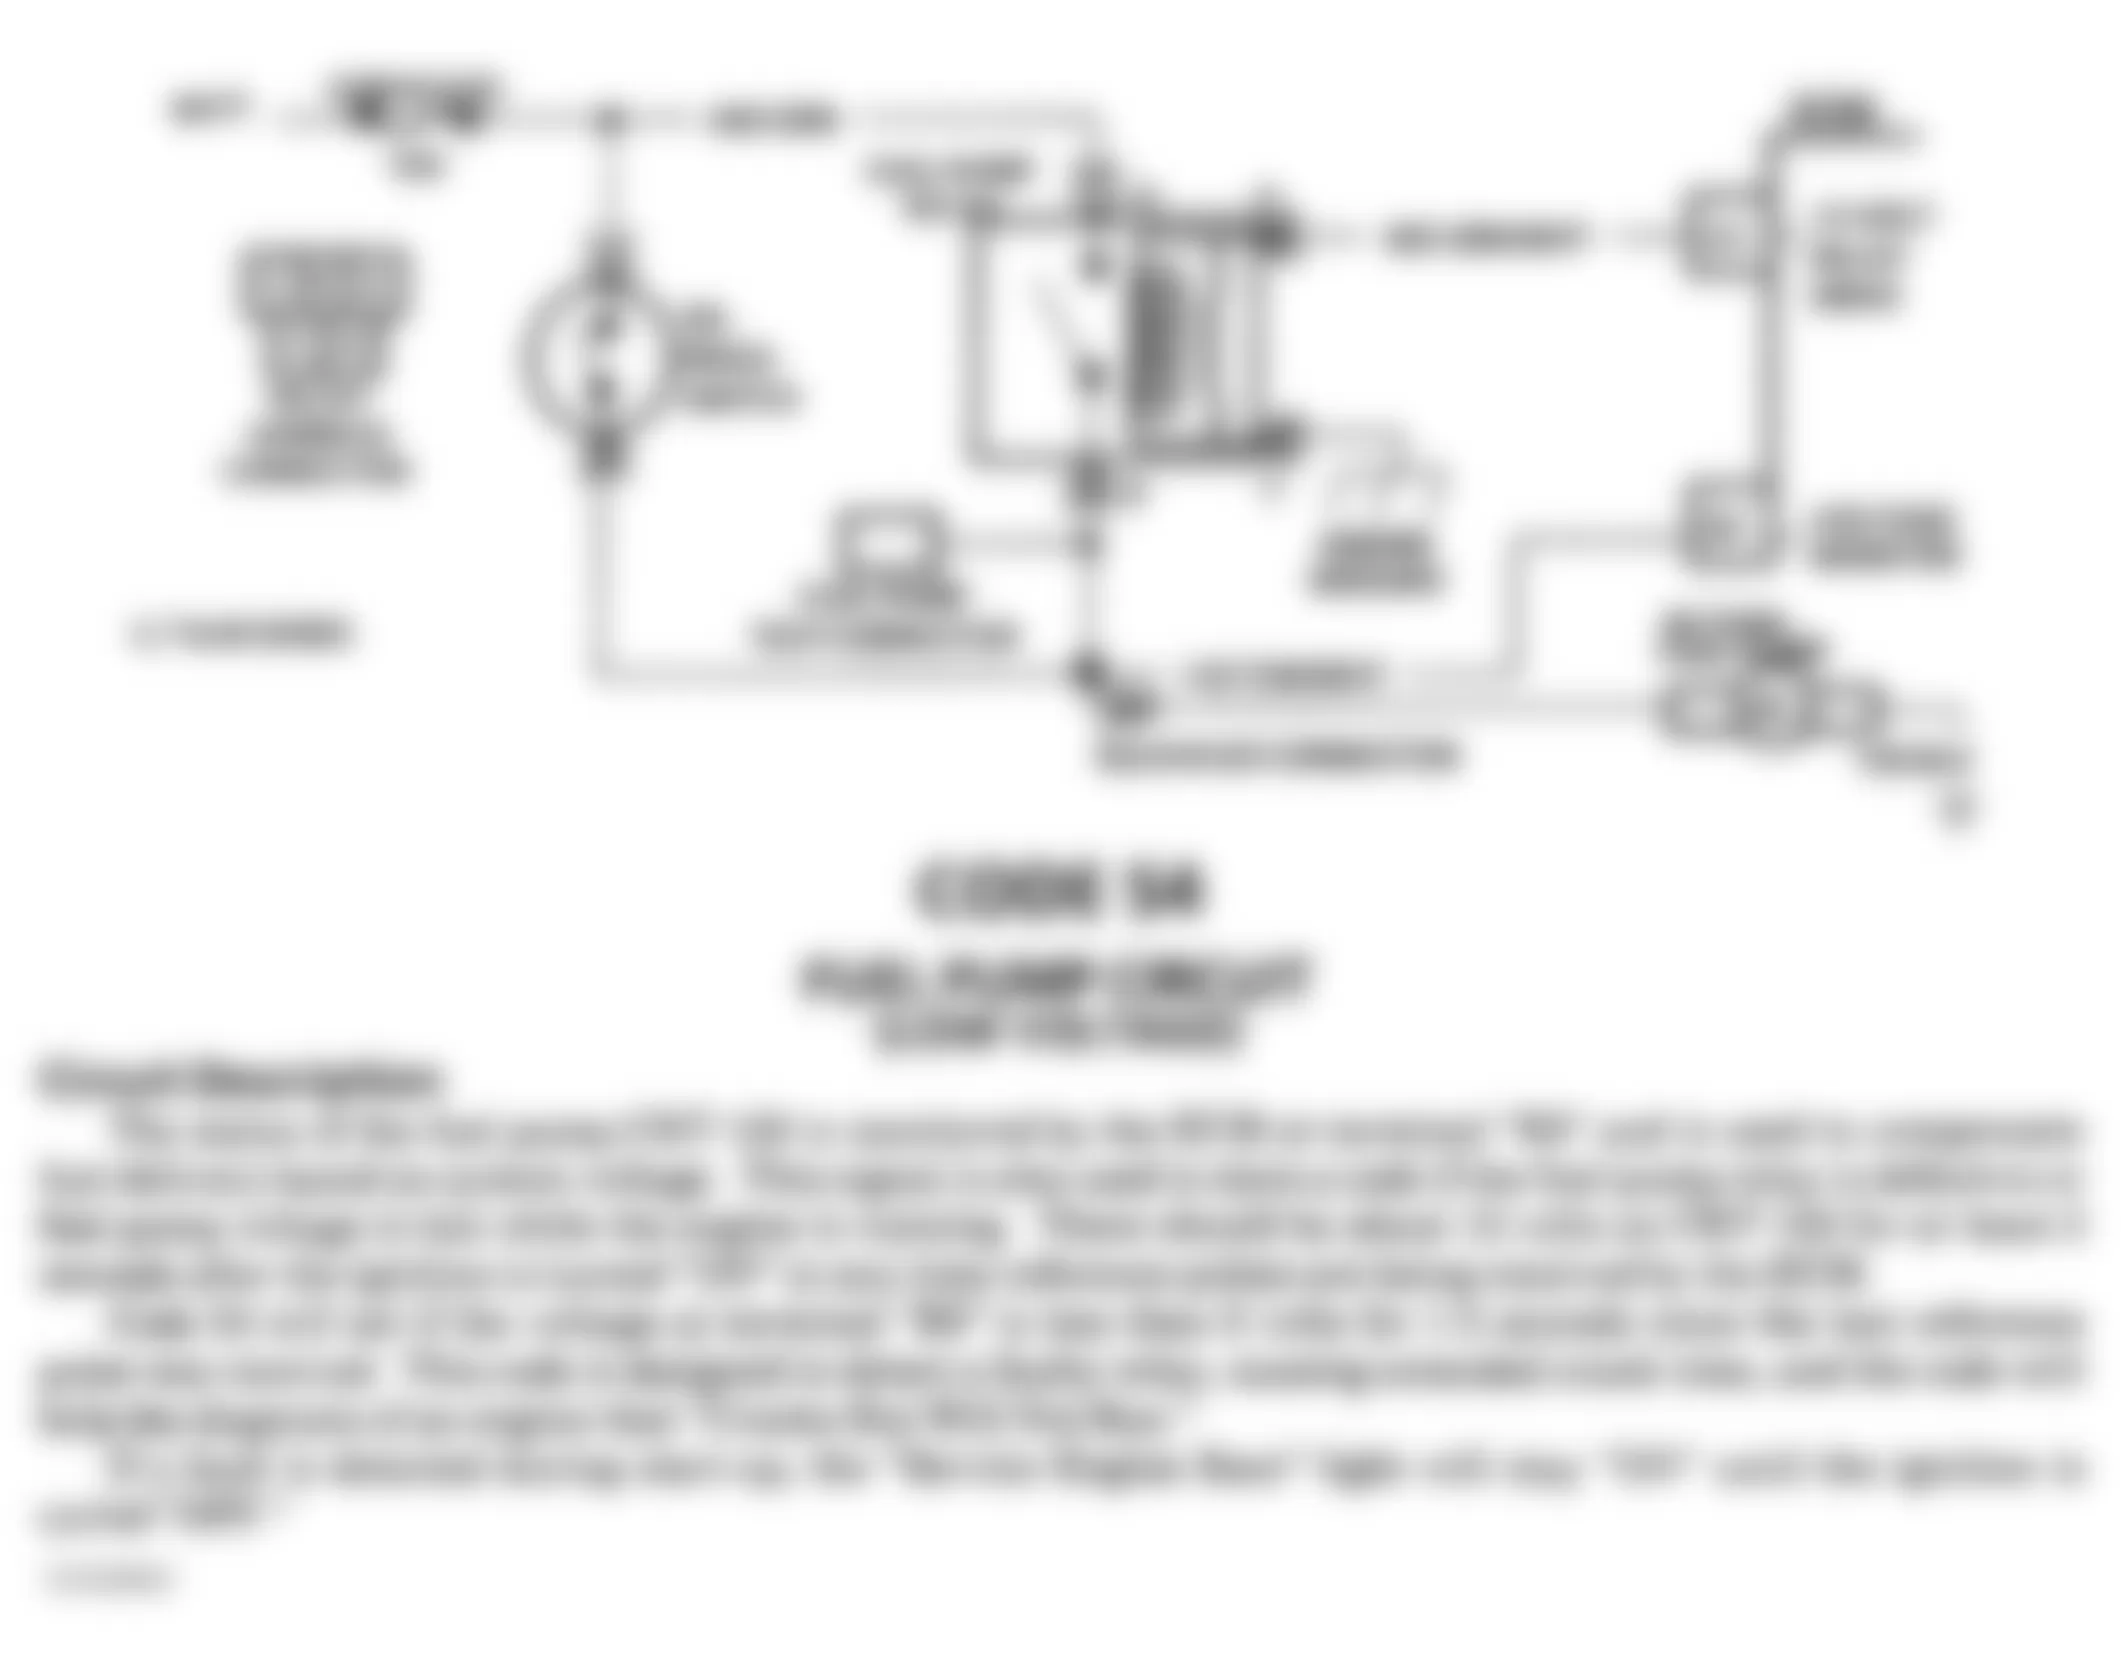 Chevrolet S10 Blazer 1991 - Component Locations -  Code 54 Schematic (S & T Series) Fuel Pump Circuit - With Circuit Description